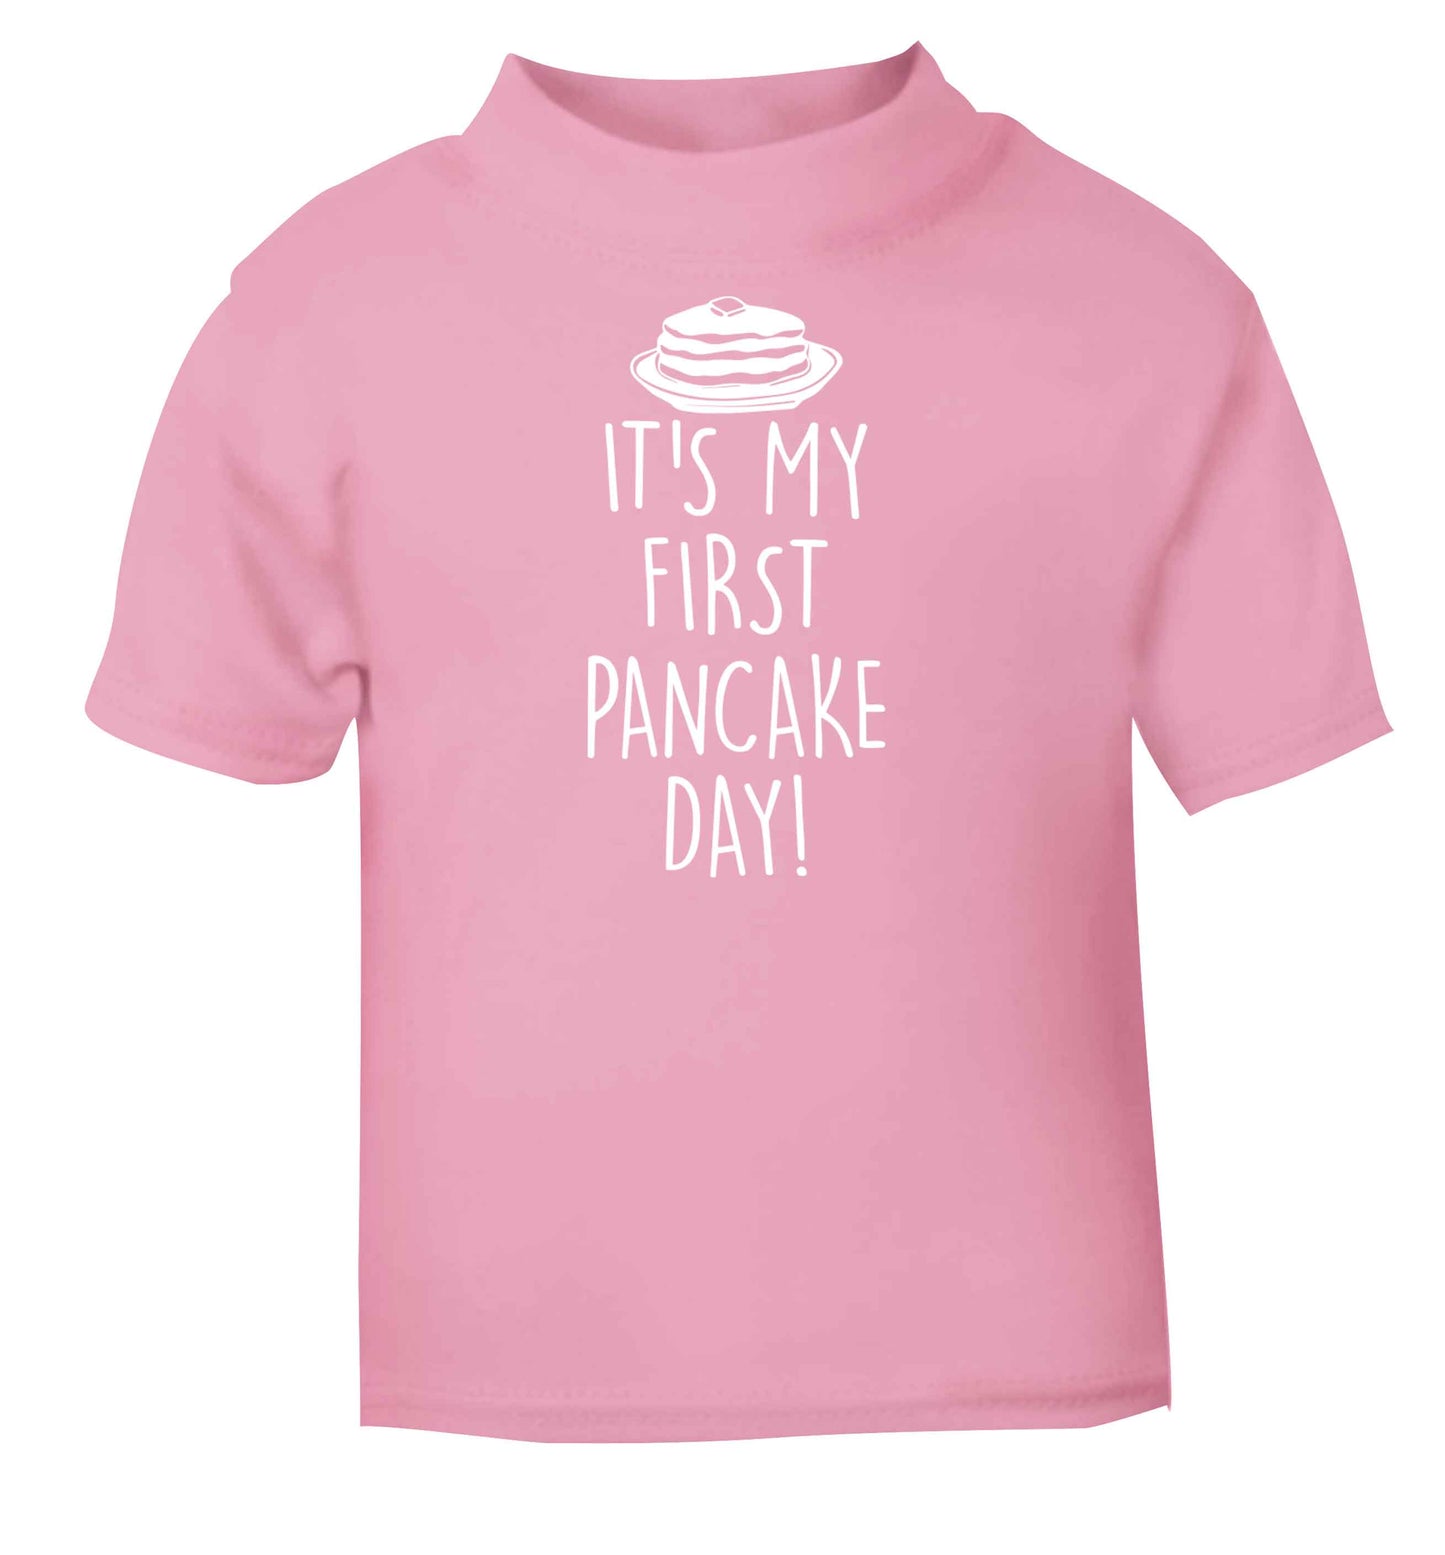 It's my first pancake day light pink baby toddler Tshirt 2 Years